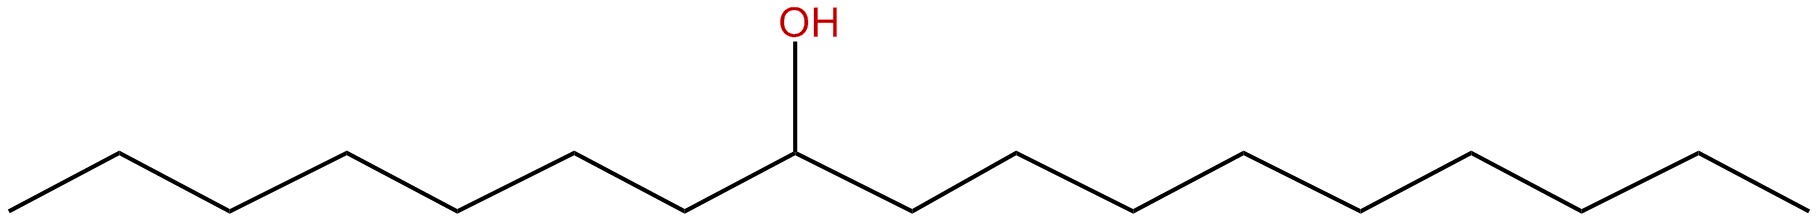 Image of 8-heptadecanol